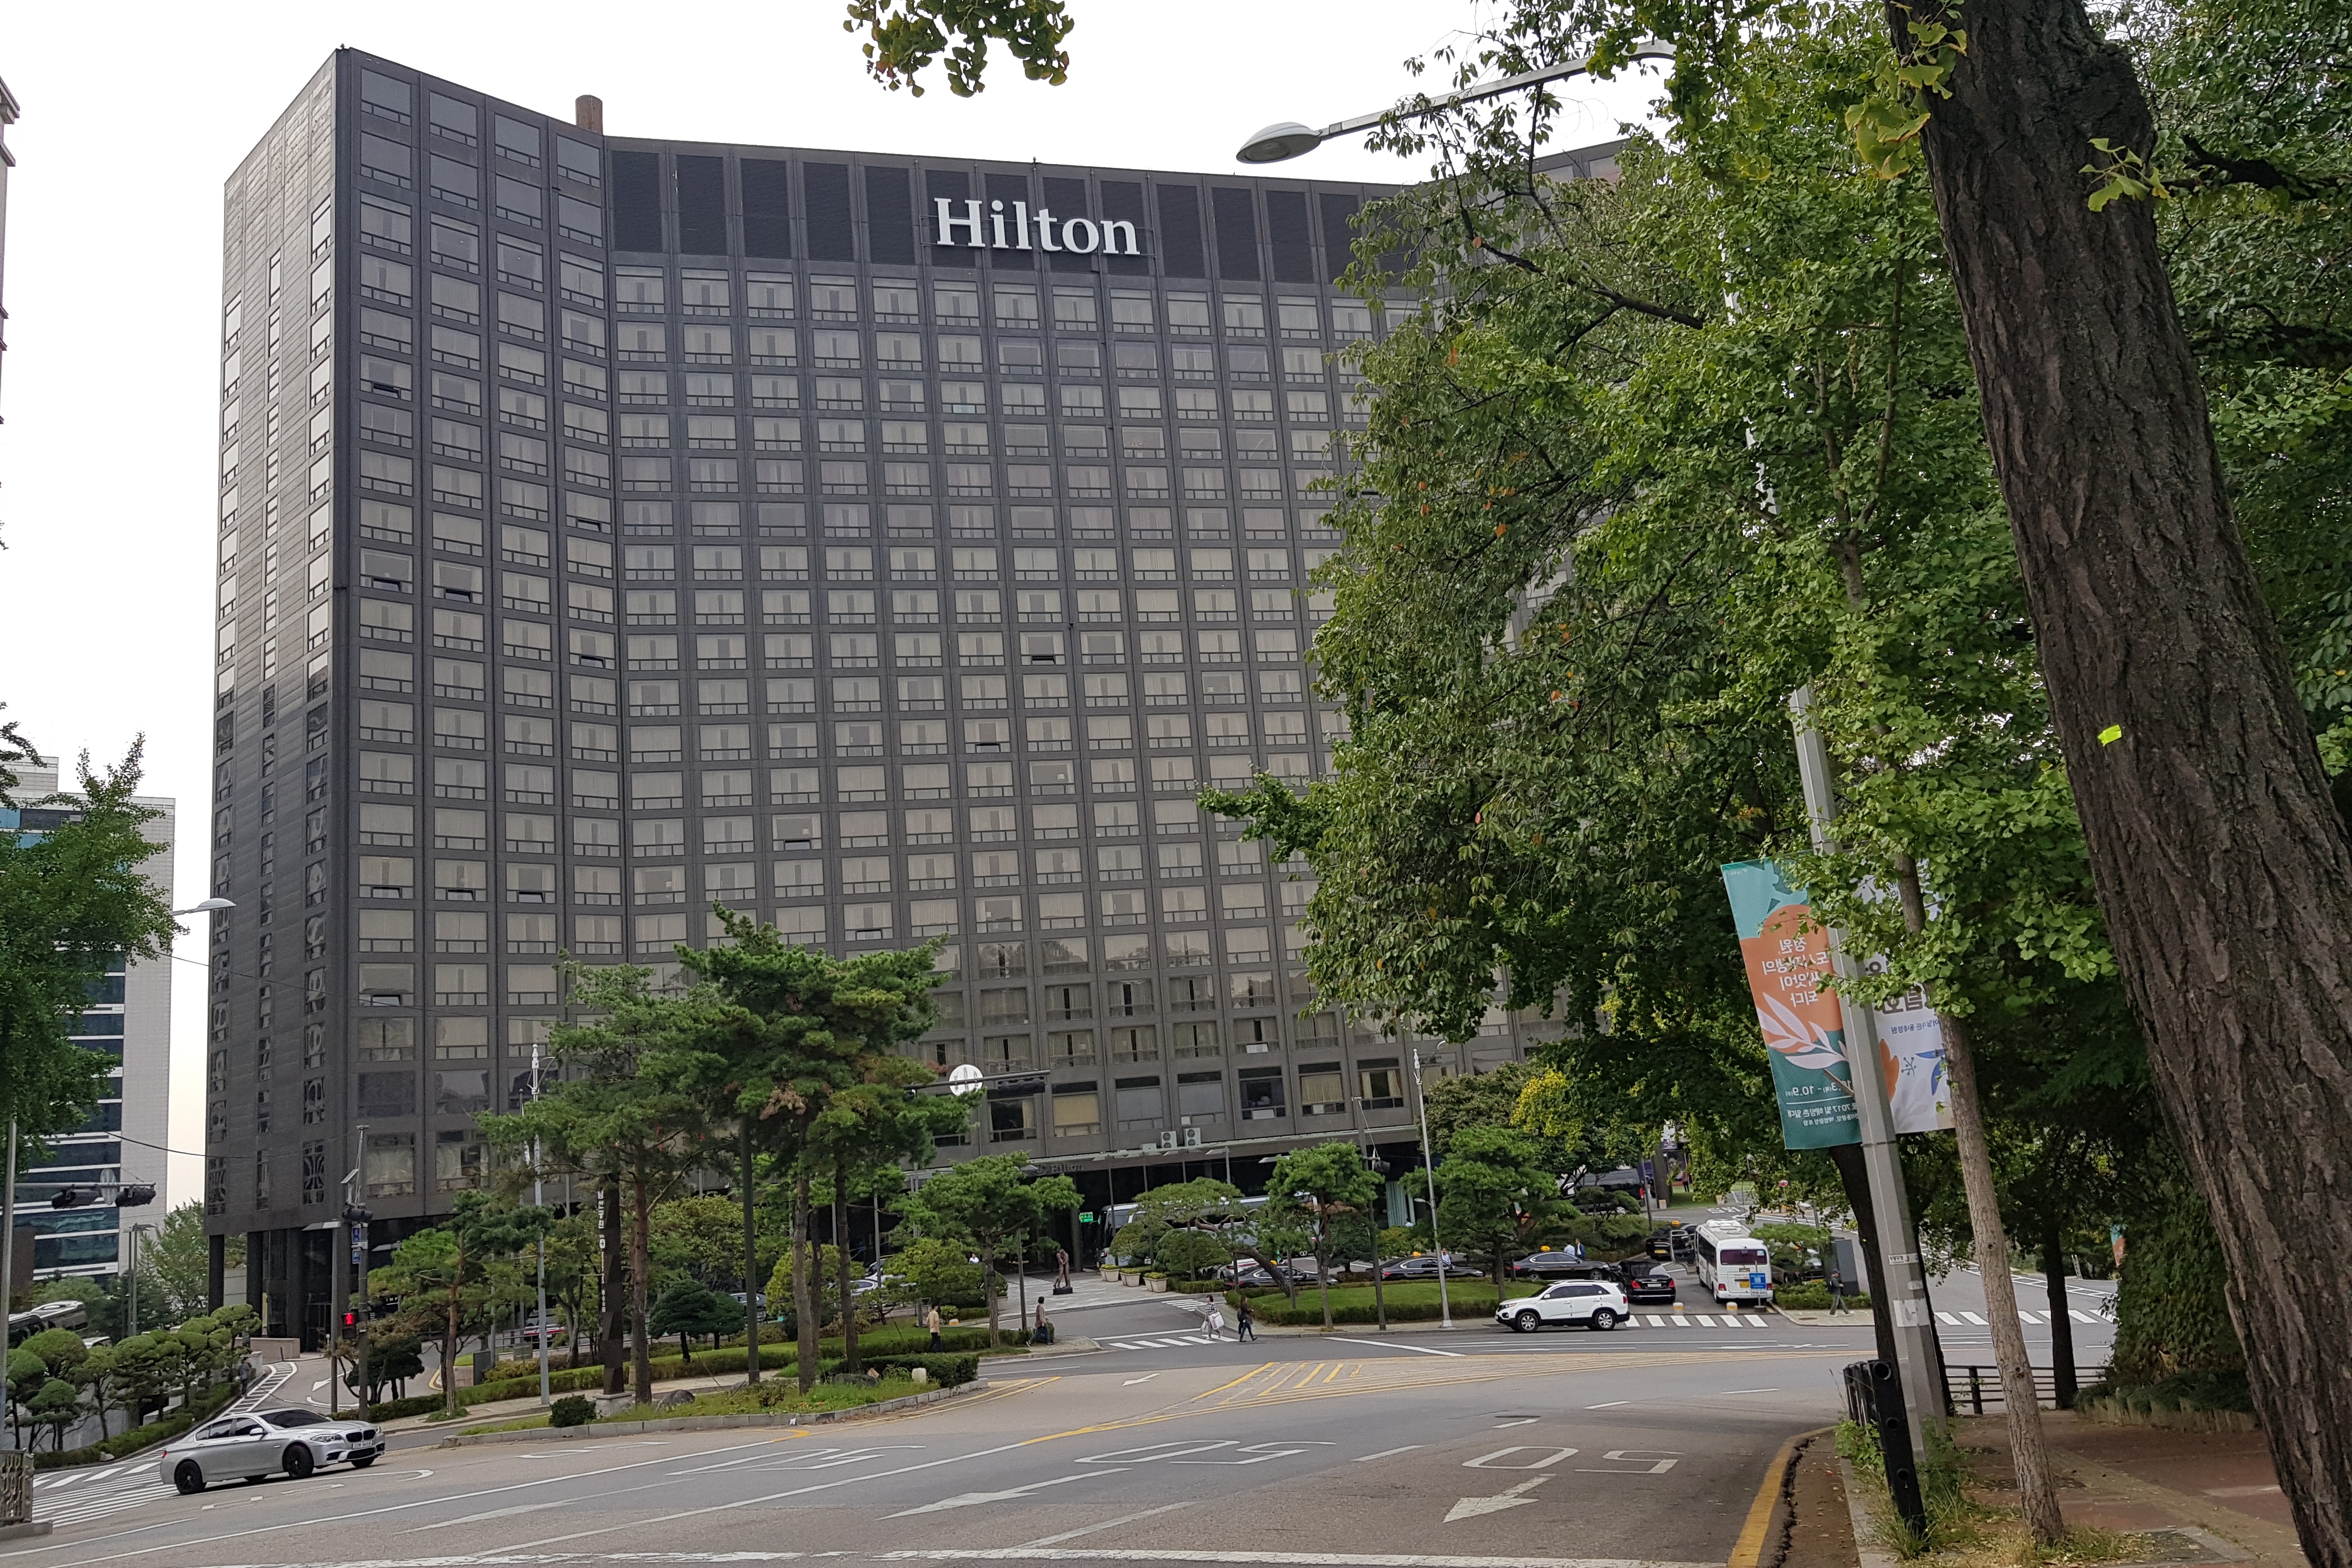 Millennium Hilton Seoul0 : Exterior view of the Millennium Hilton Seoul
